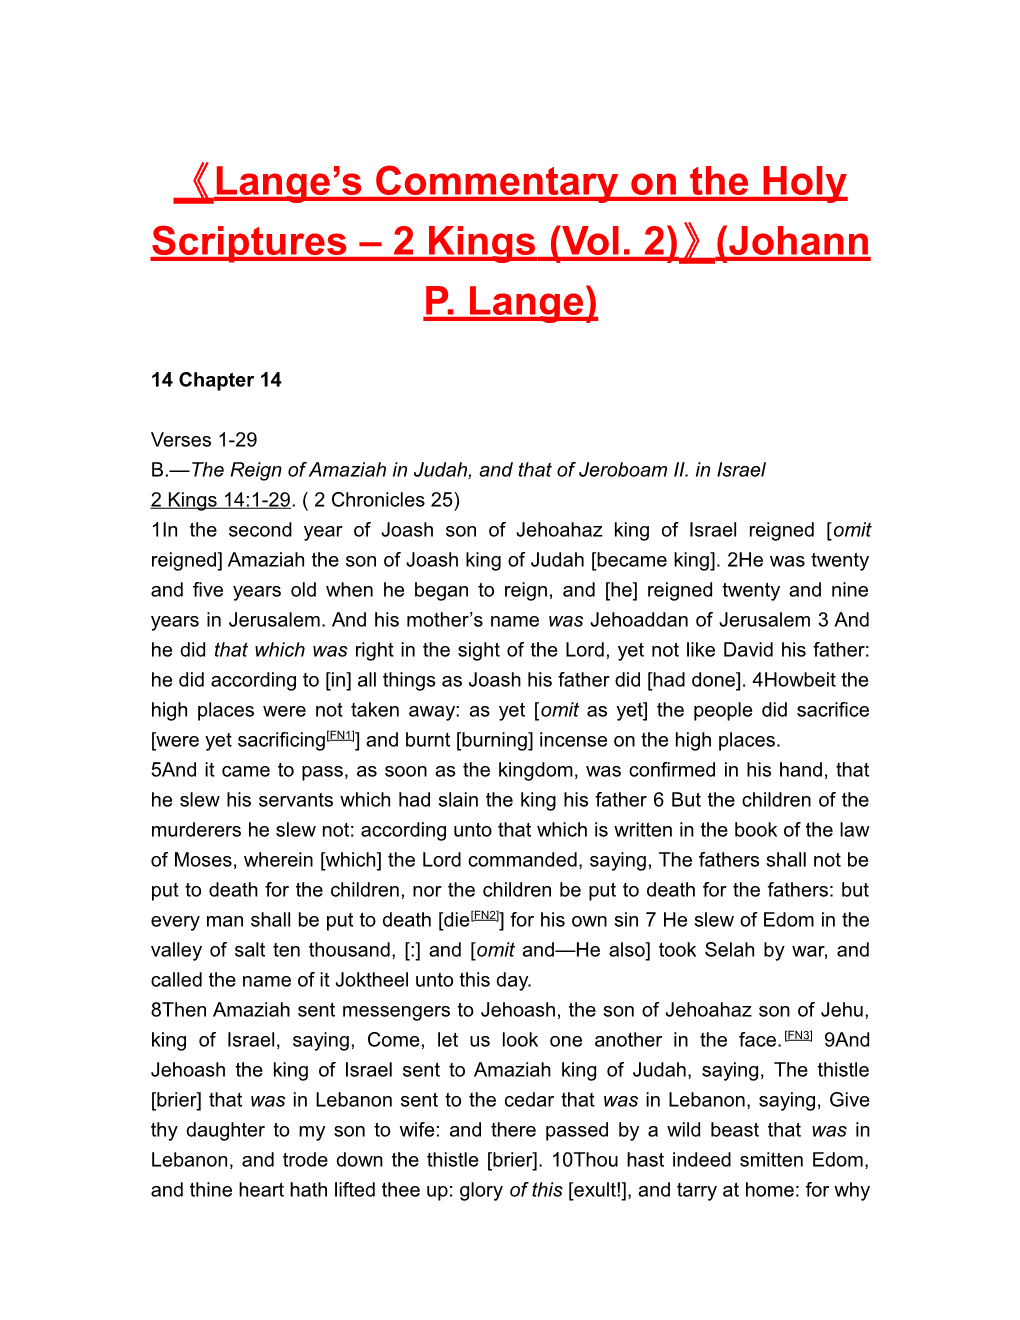 Lange S Commentary on the Holy Scriptures 2 Kings (Vol. 2) (Johann P. Lange)